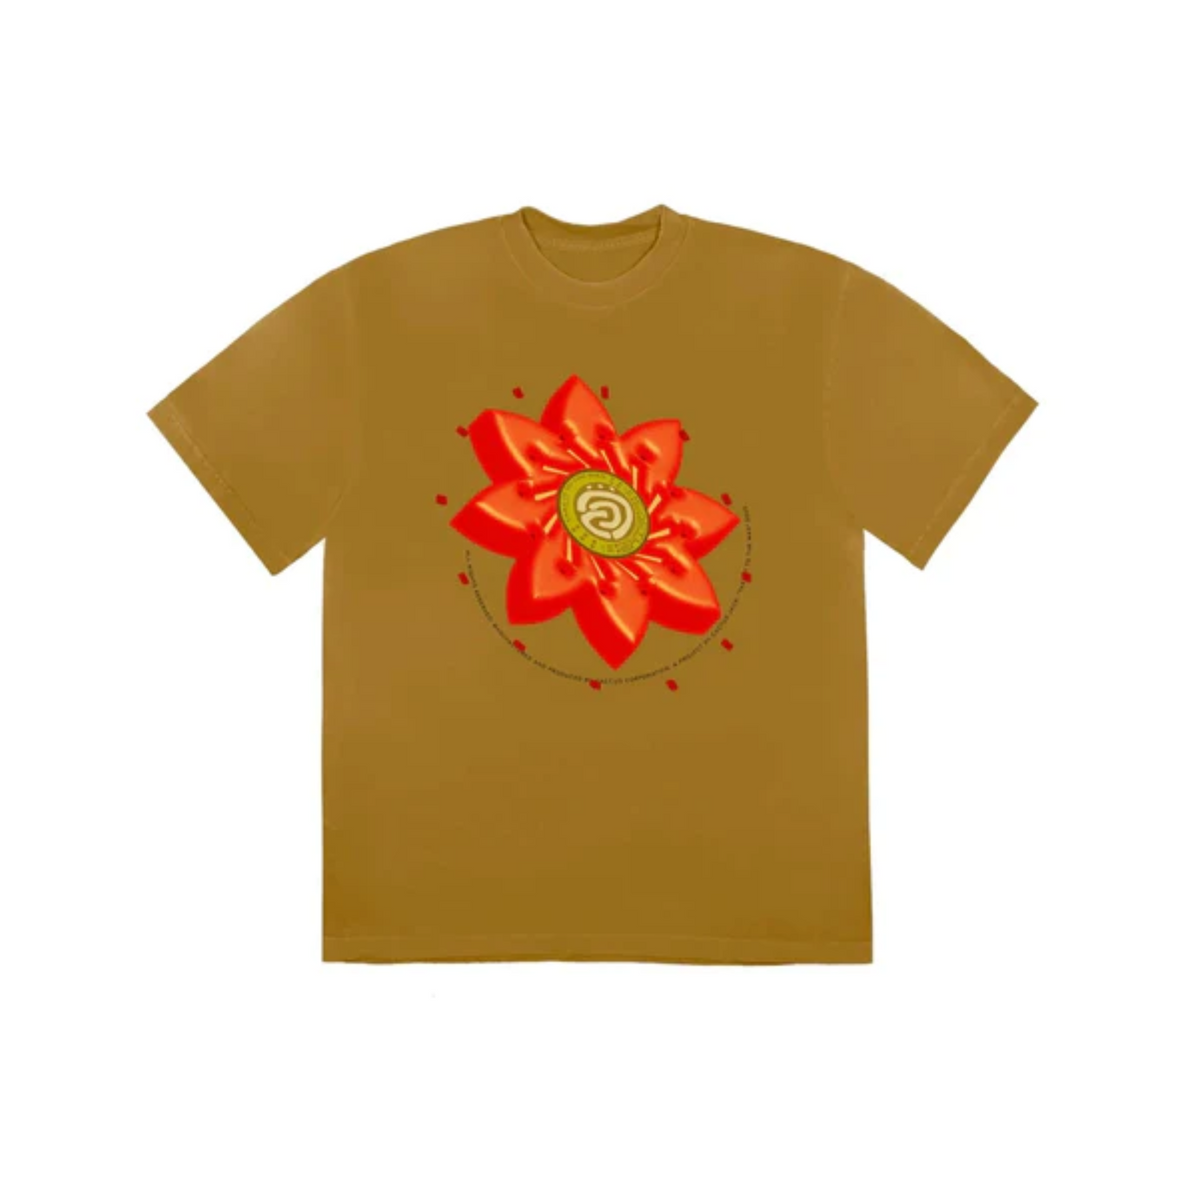 Travis Scott Cactus Jack Flower T-shirt "Gold"